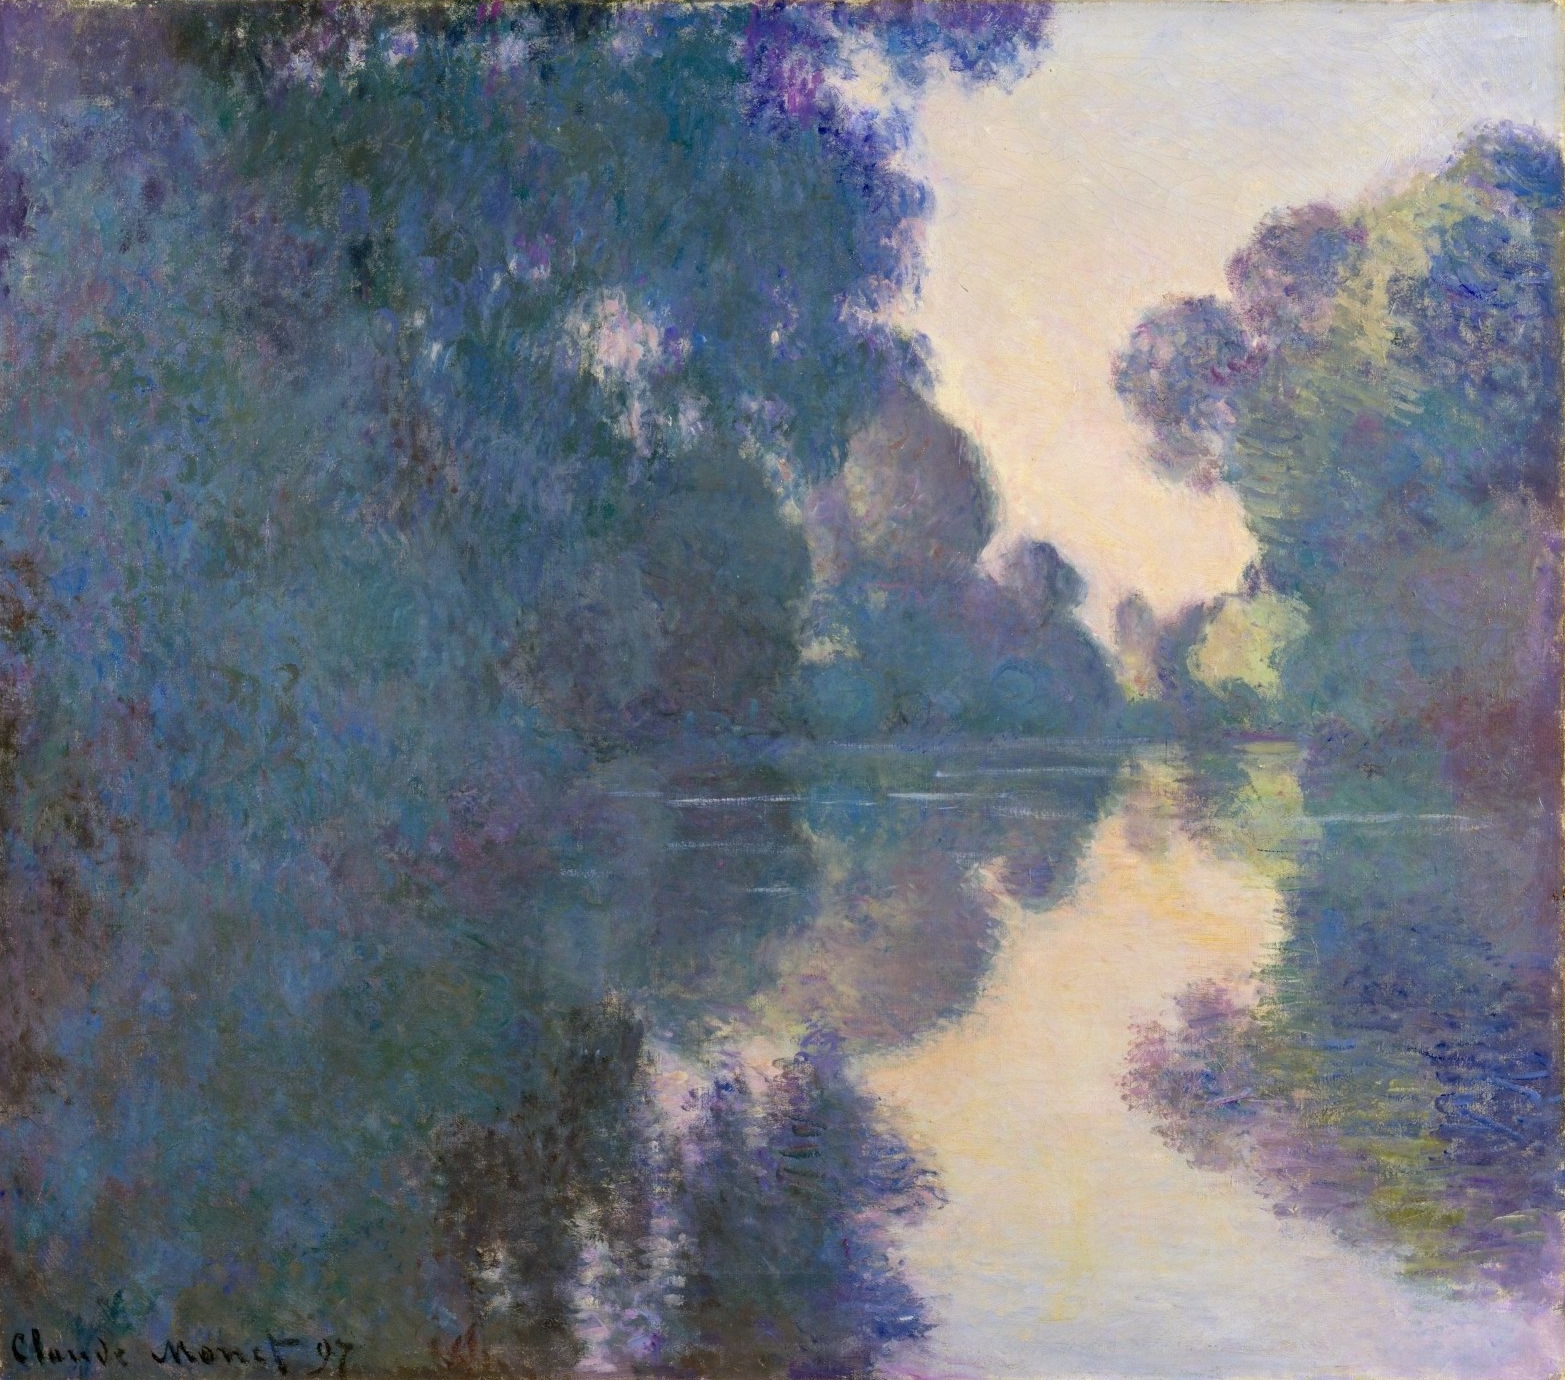 Claude+Monet-1840-1926 (539).jpg